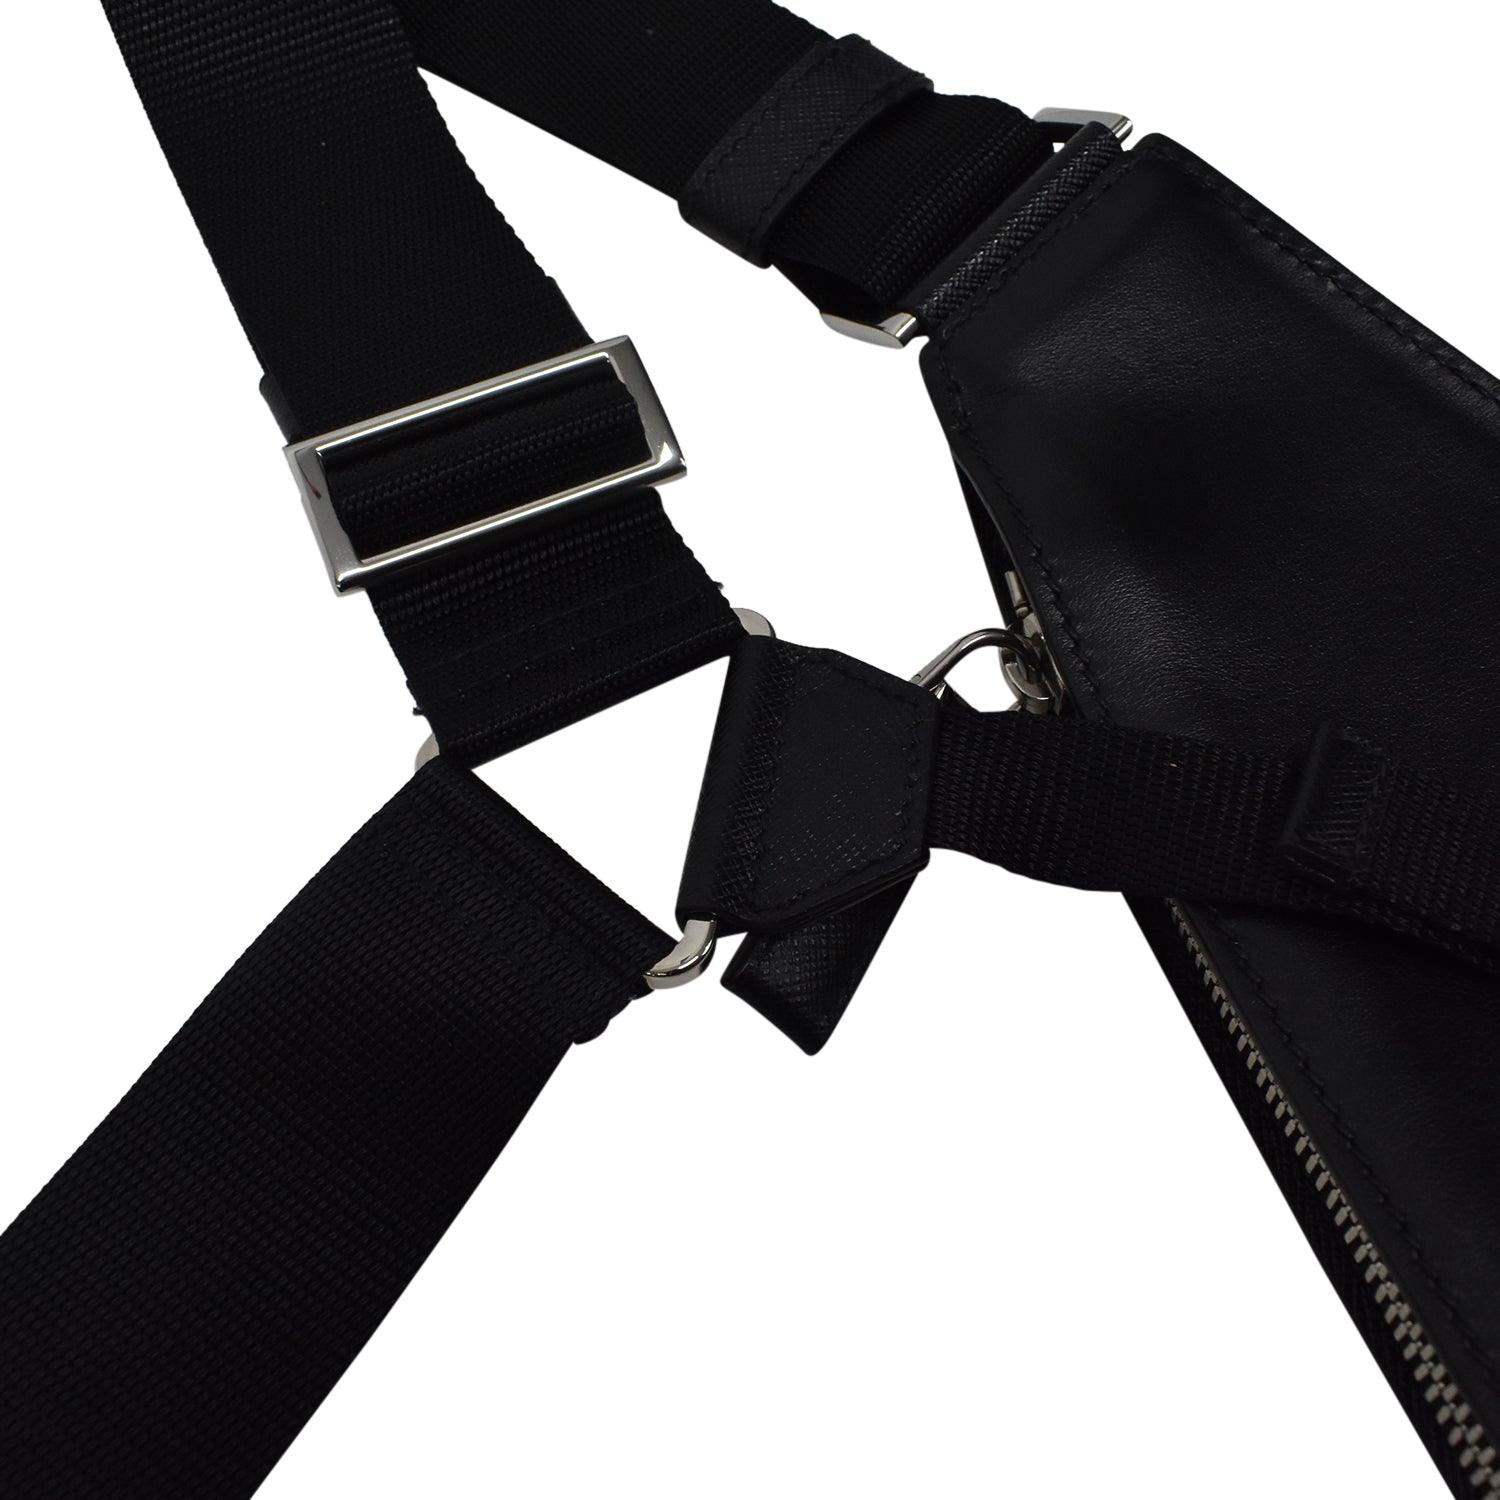 Prada Crossbody Bag - Fashionably Yours